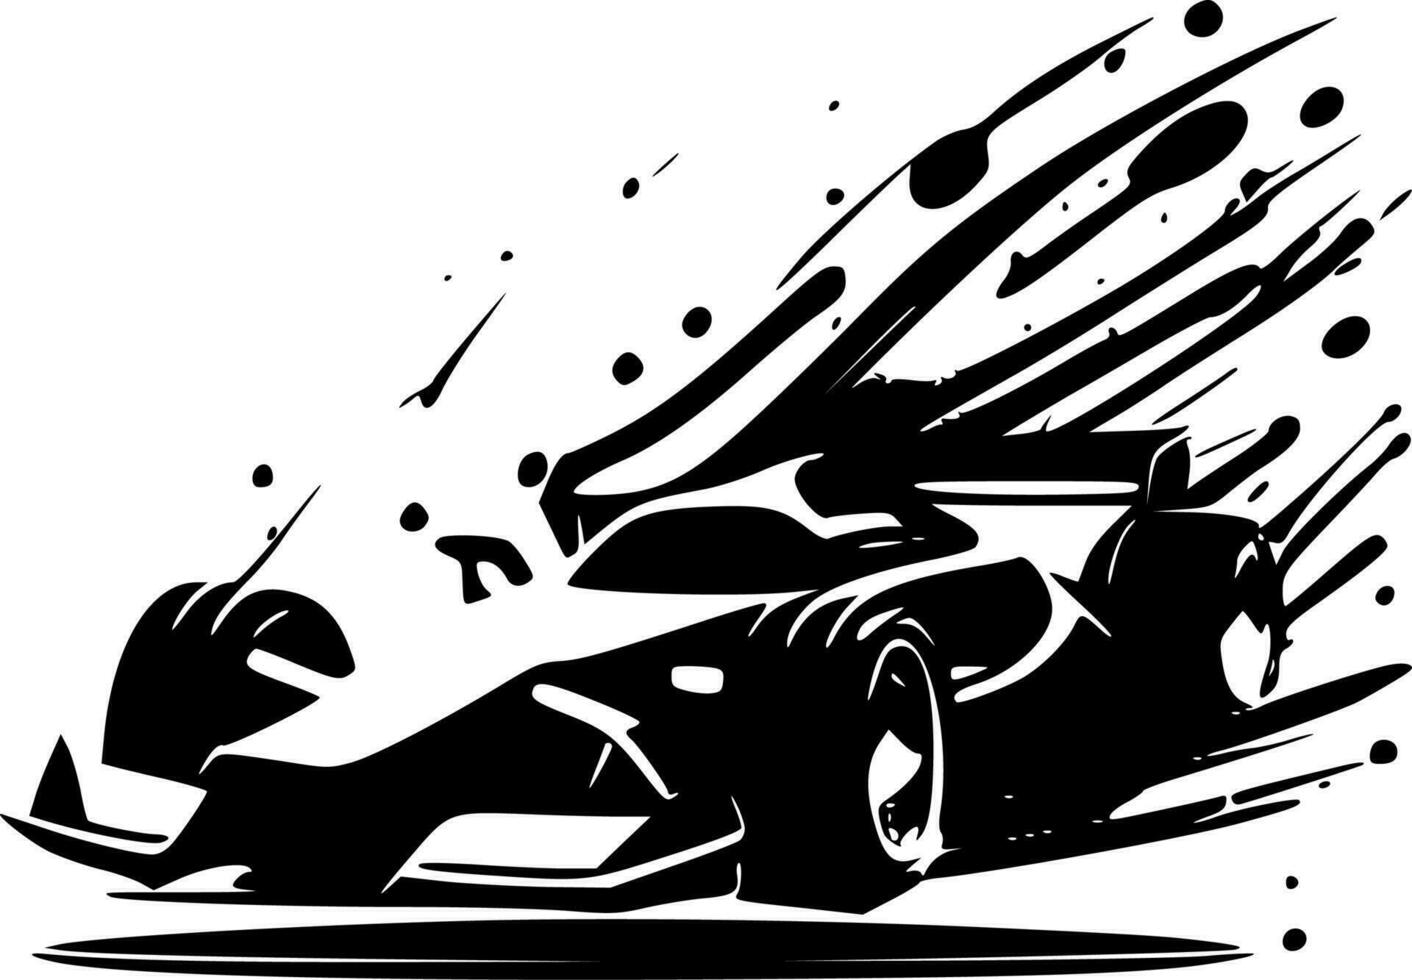 Racing, Minimalist and Simple Silhouette - Vector illustration